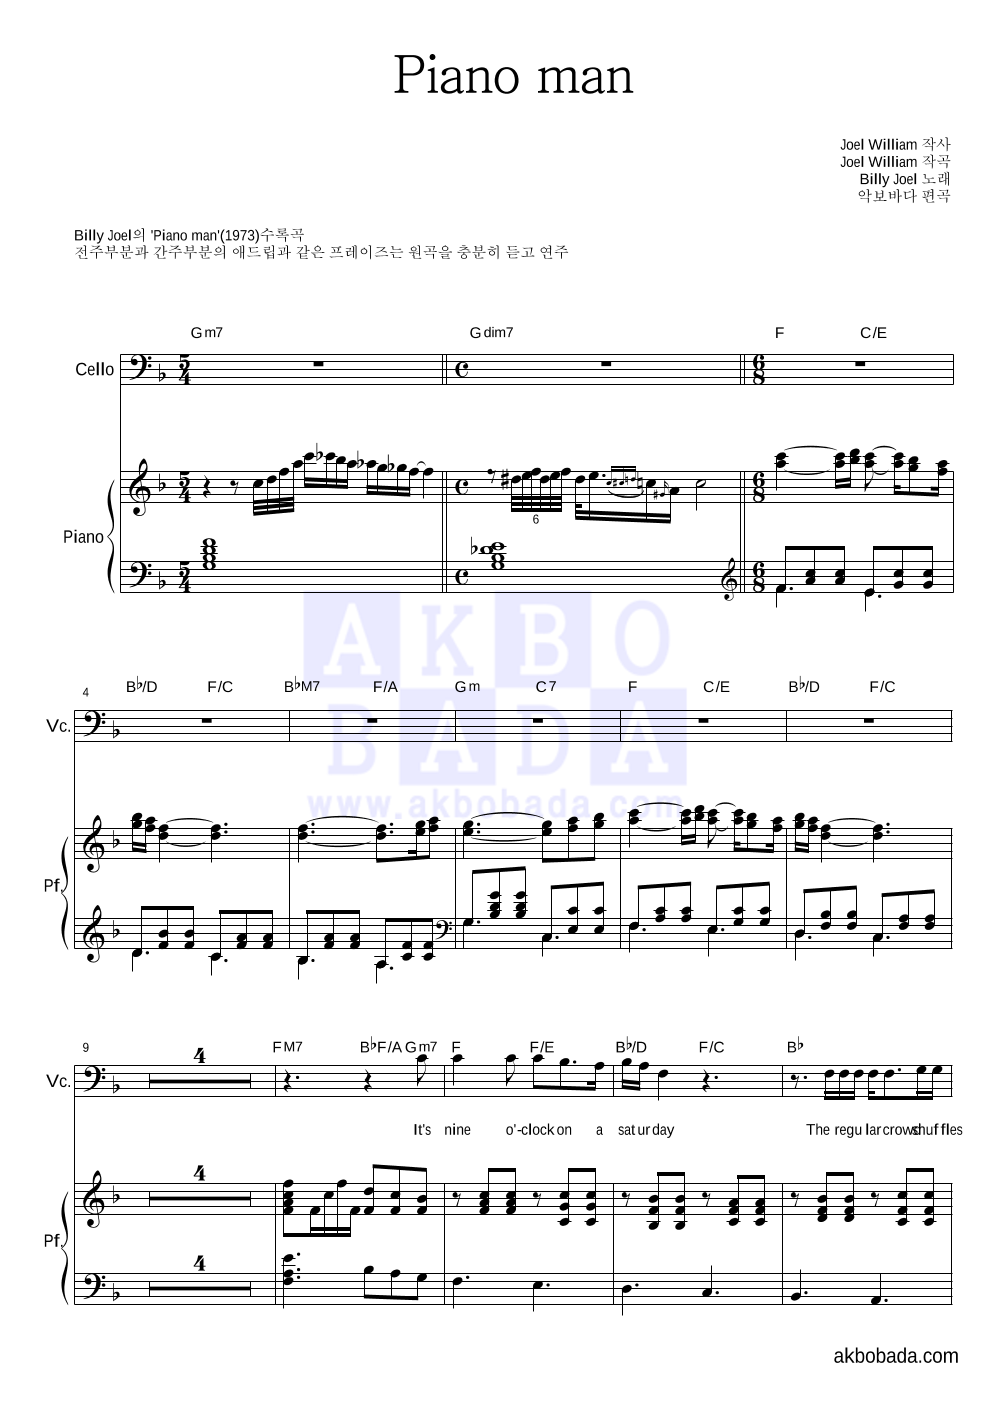 Billy Joel - Piano man 첼로&피아노 악보 